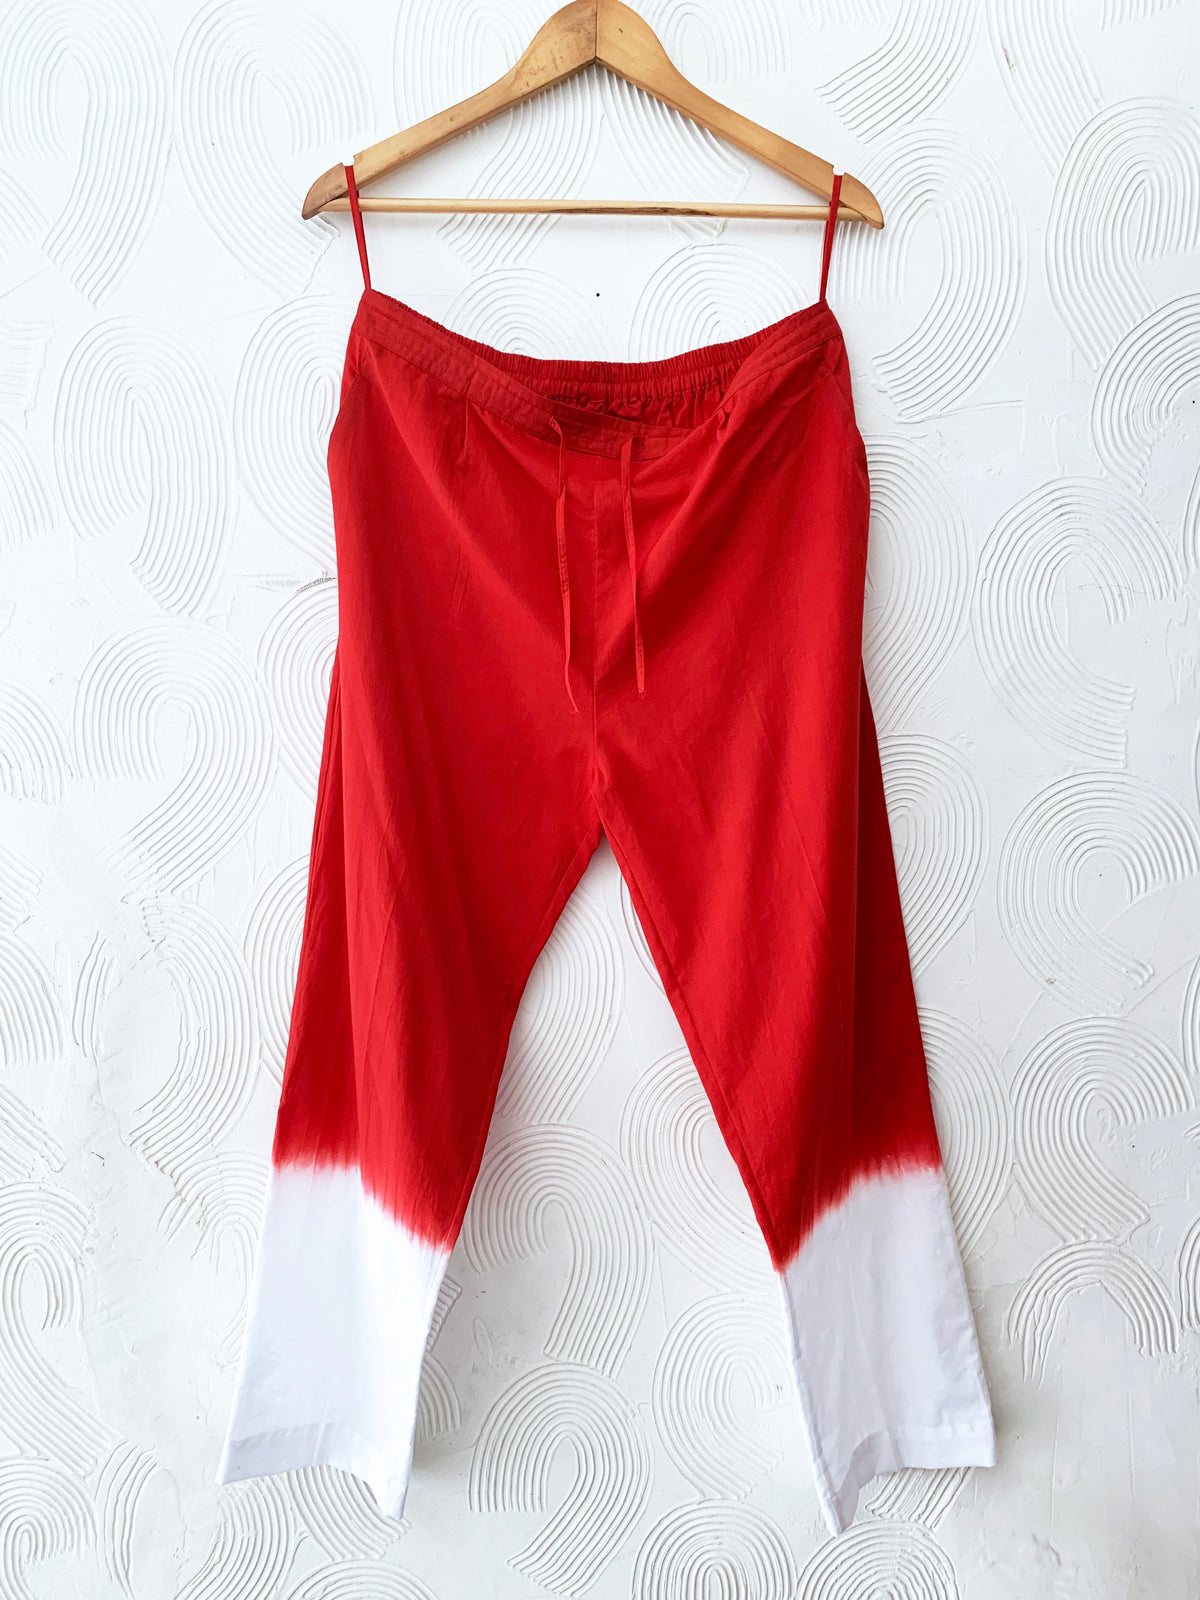 Red Dip-Dye Pants